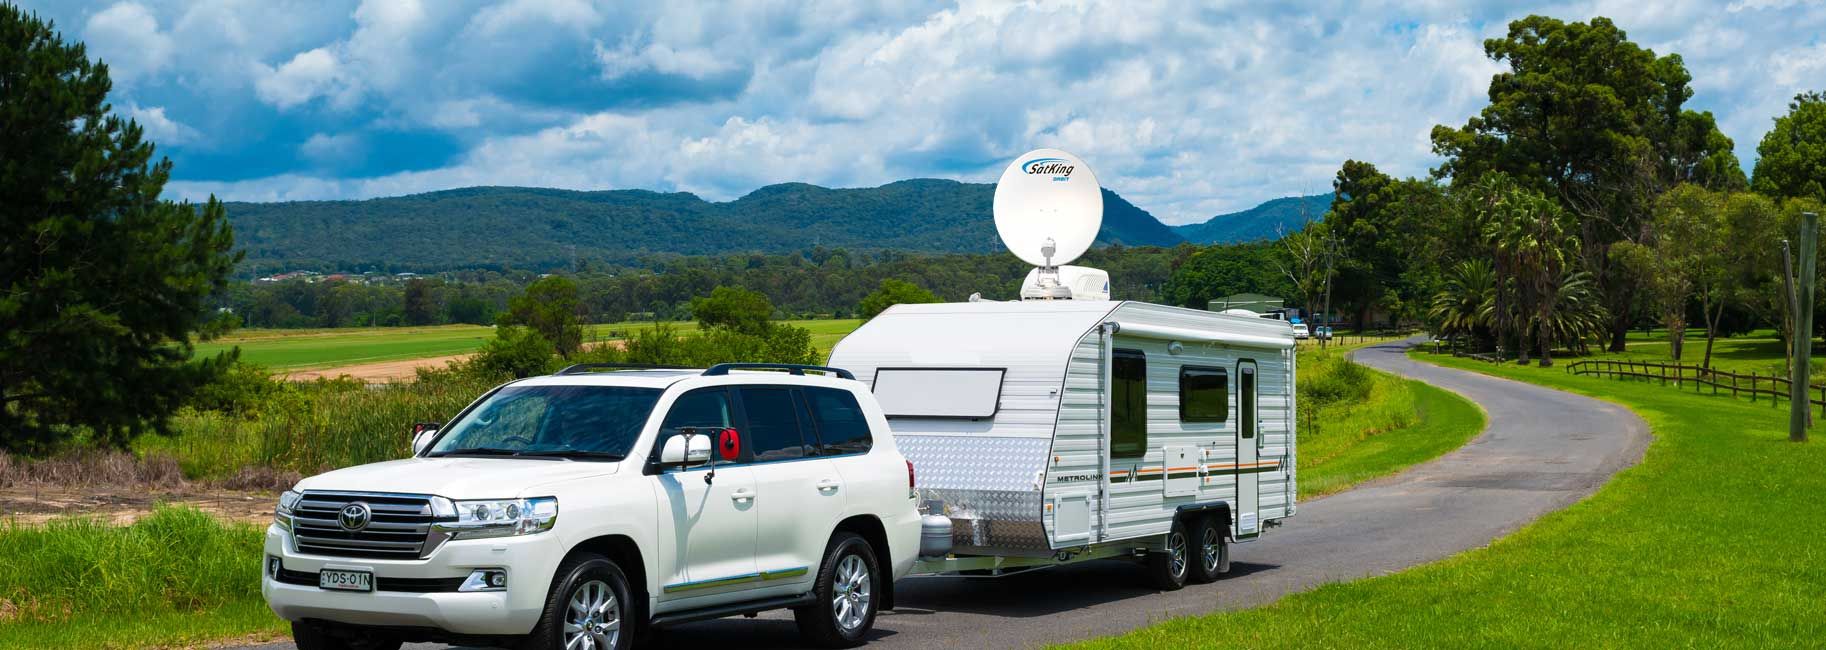 auto satellite dish for caravan Australia